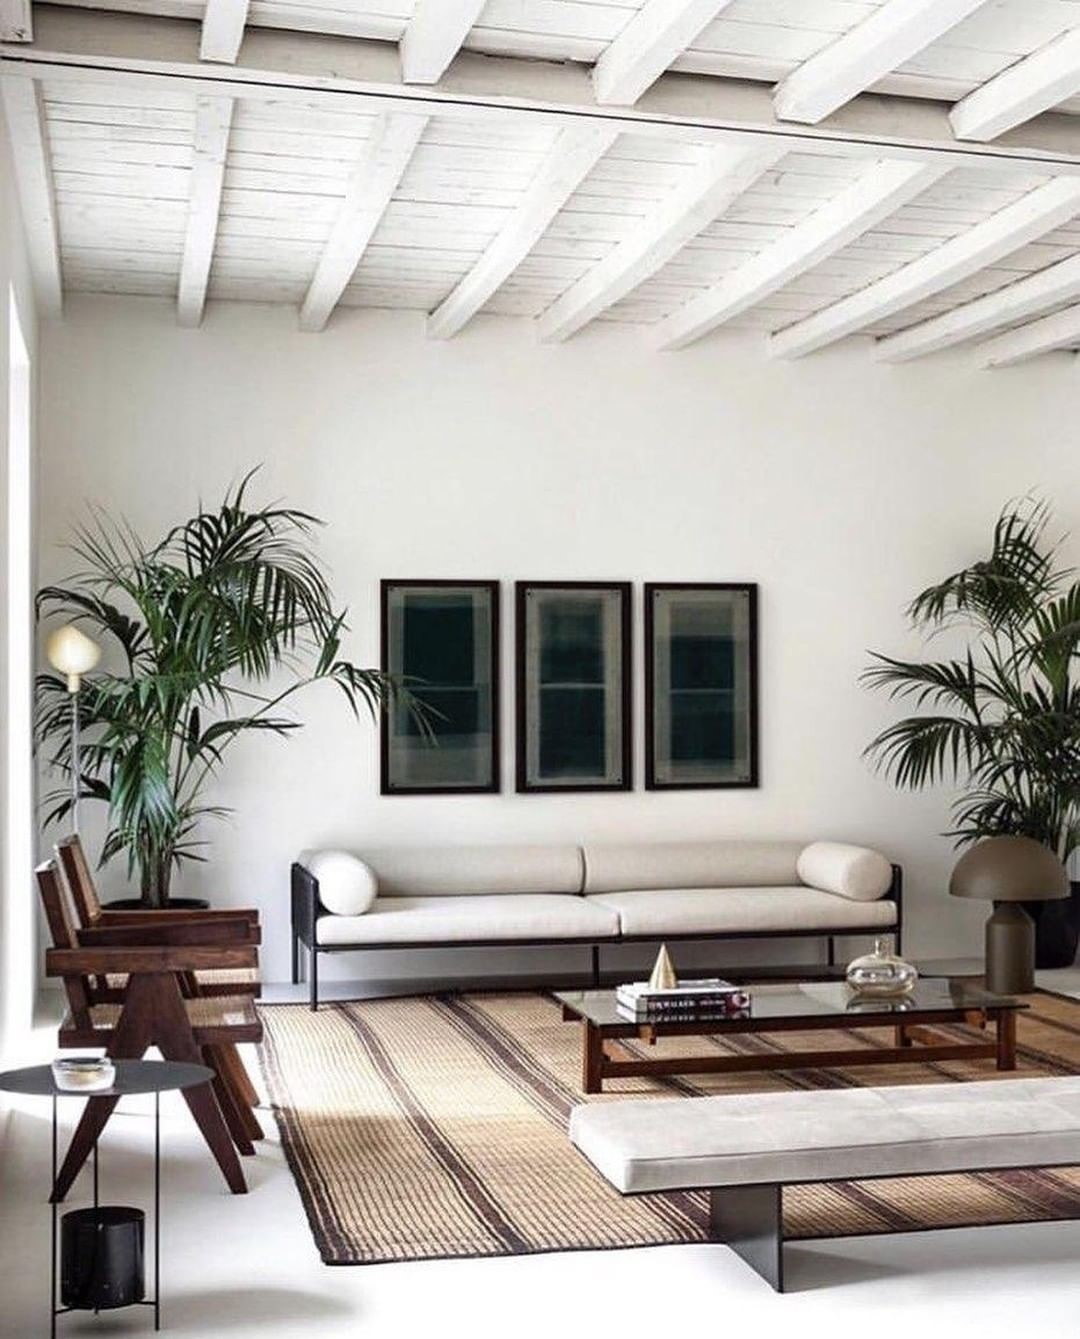 Japandi designed living room with white walls and dark wood furniture. Photo by Instagram user @srelle_studio